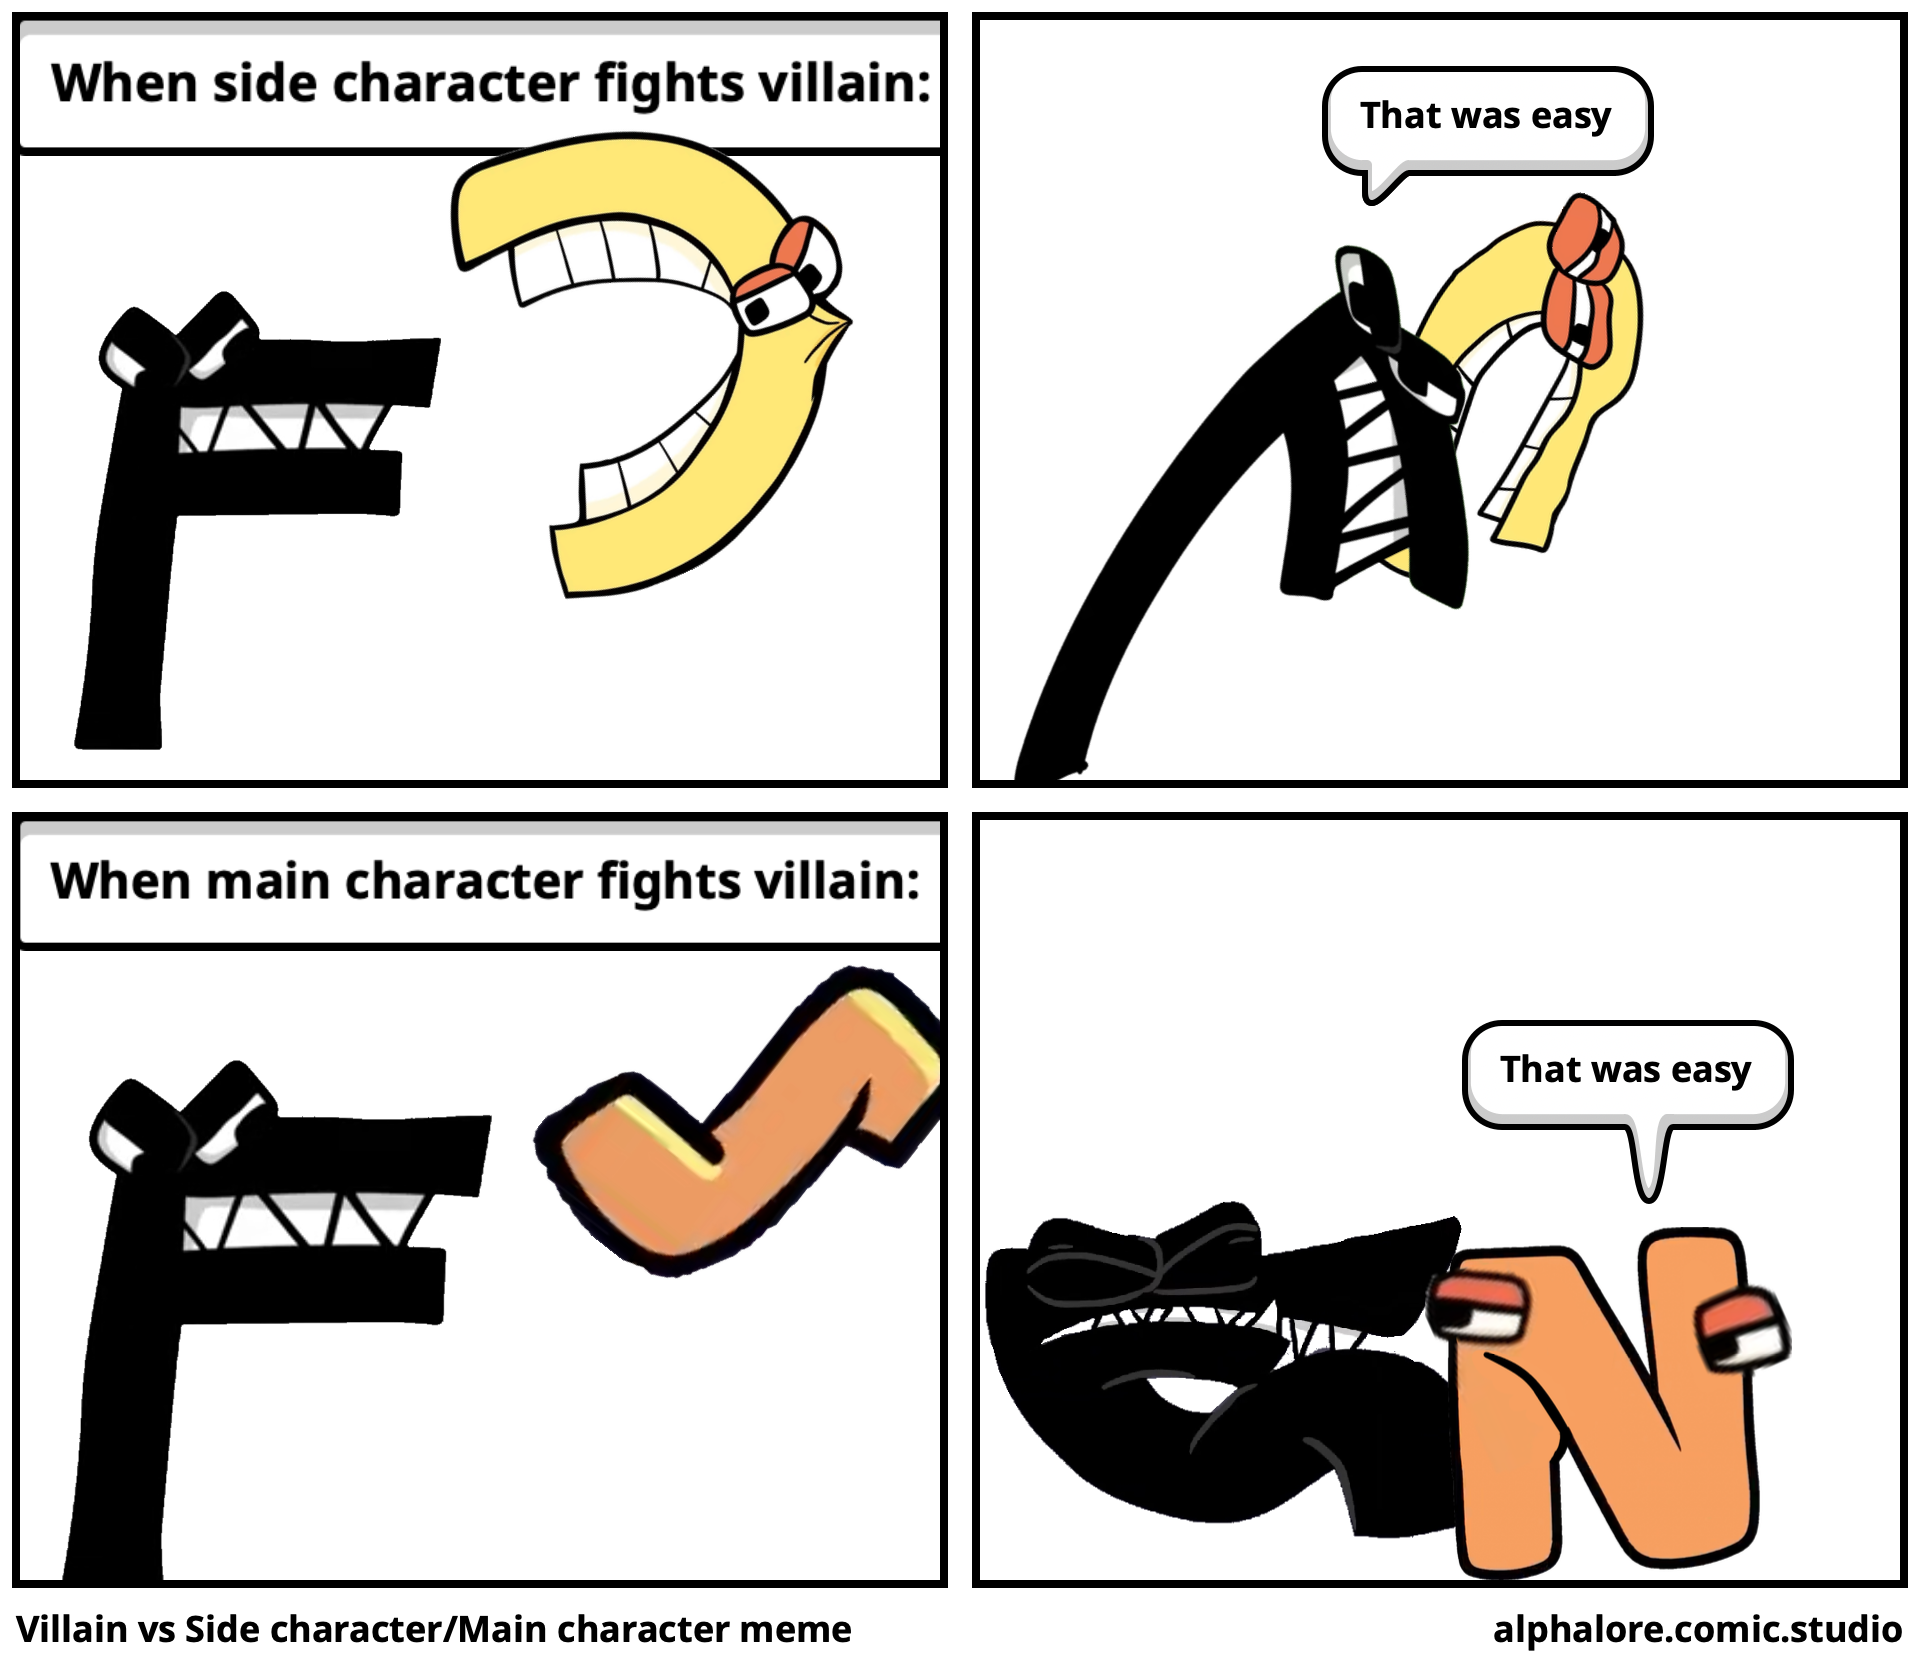 Villain vs Side character/Main character meme